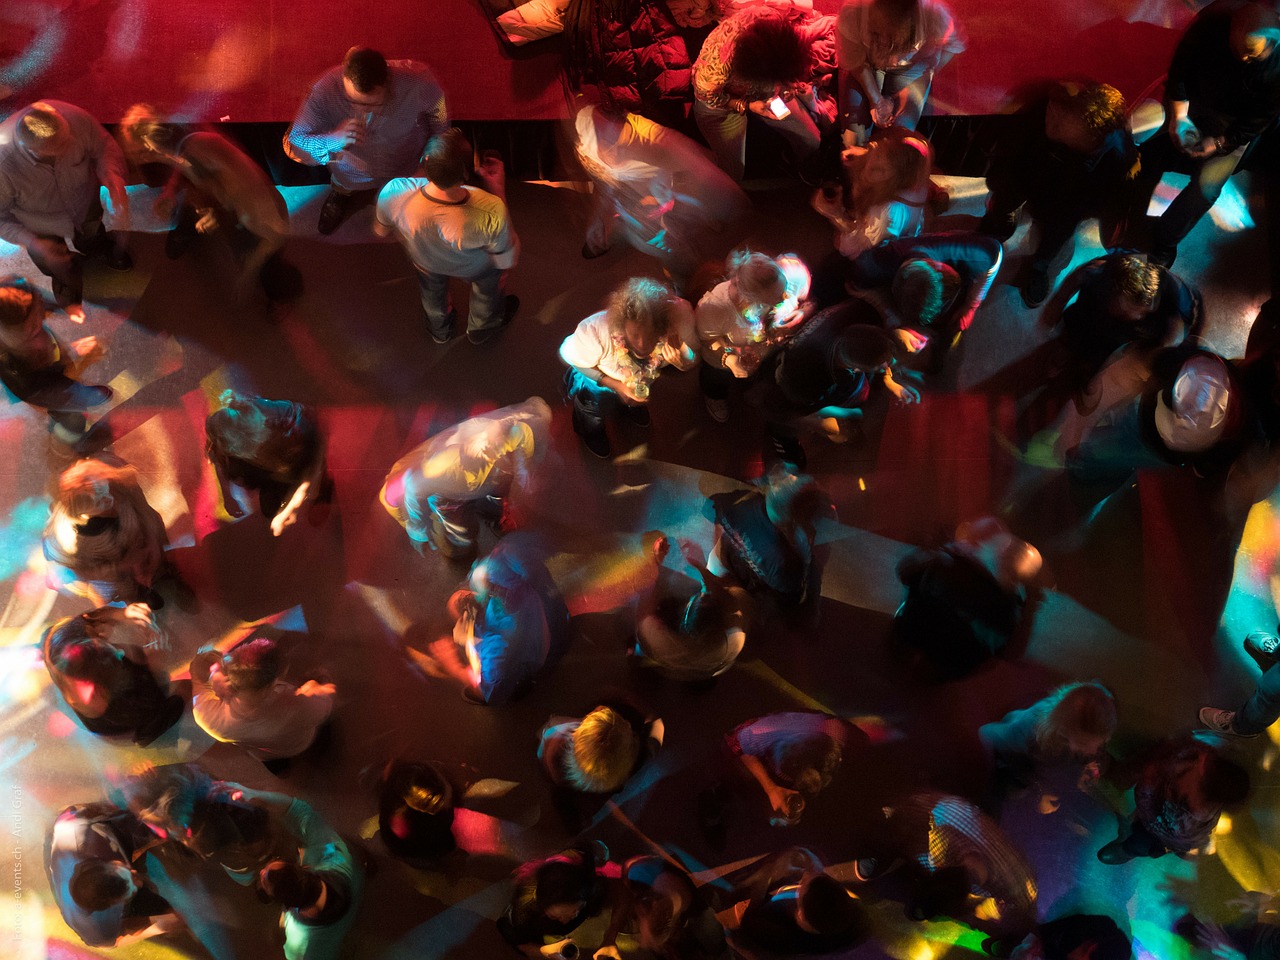 Overhead photo of dance floor and people